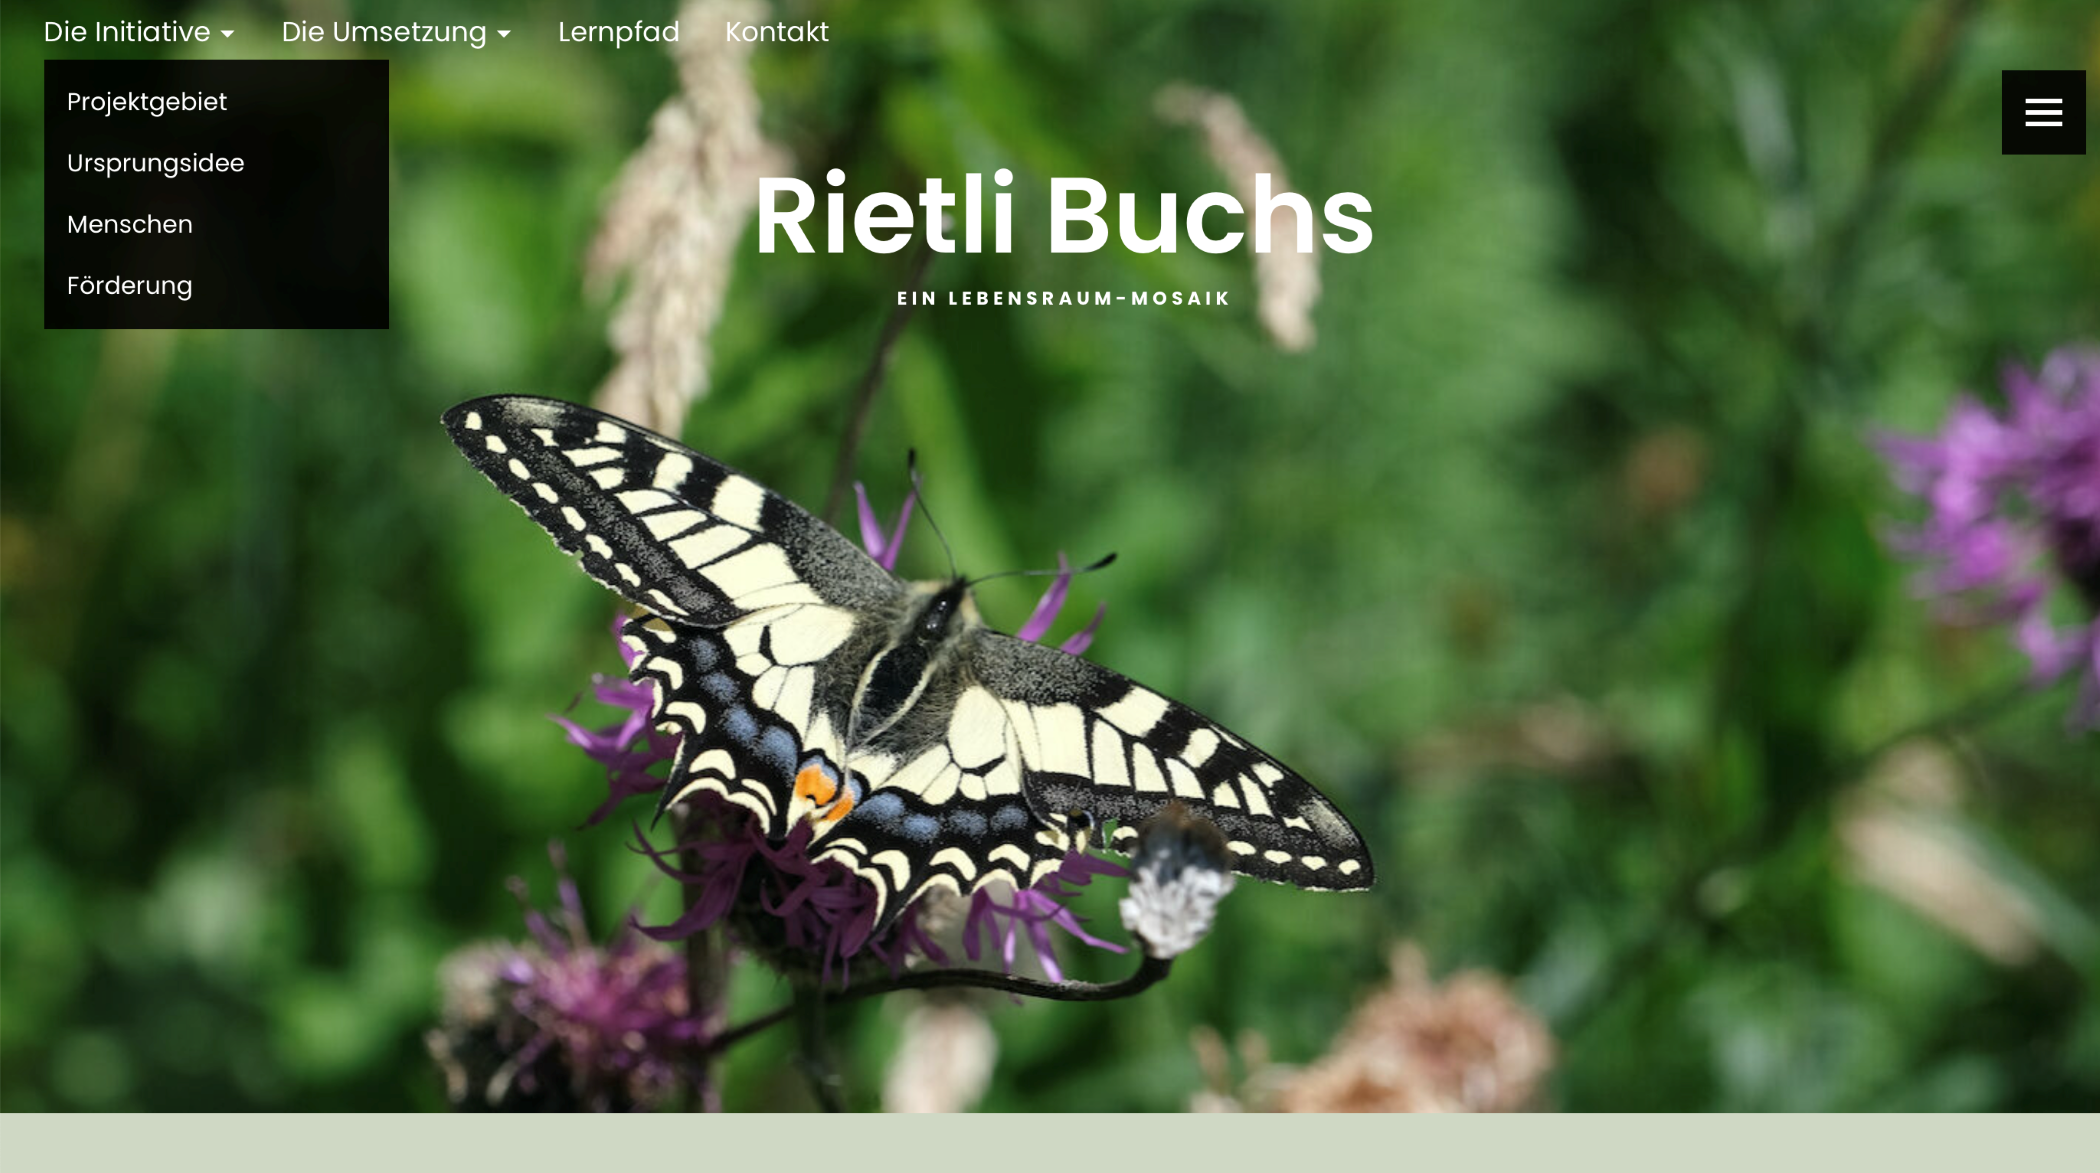 Rietli Buchs – a habitat mosaic